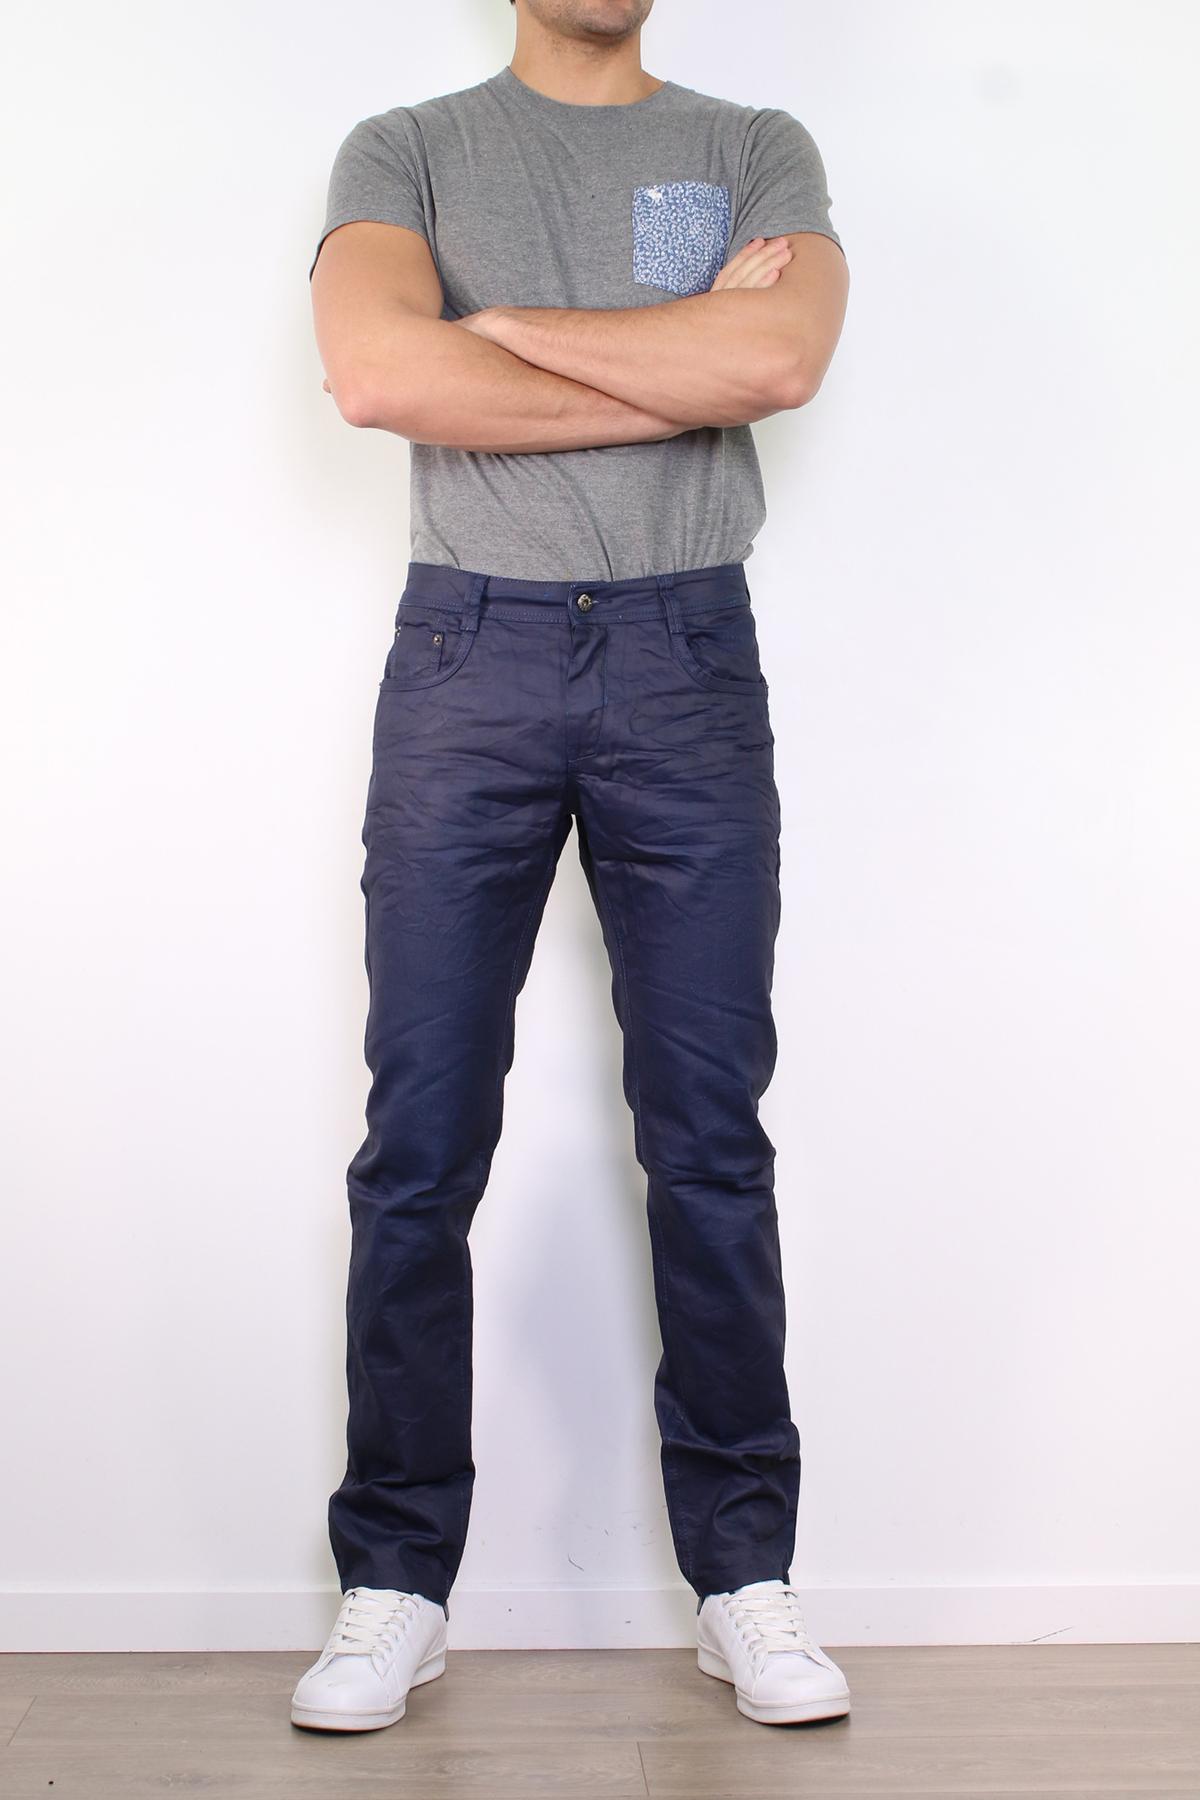 Jeans Homme Bleu jean Free Star 71006 #c Efashion Paris